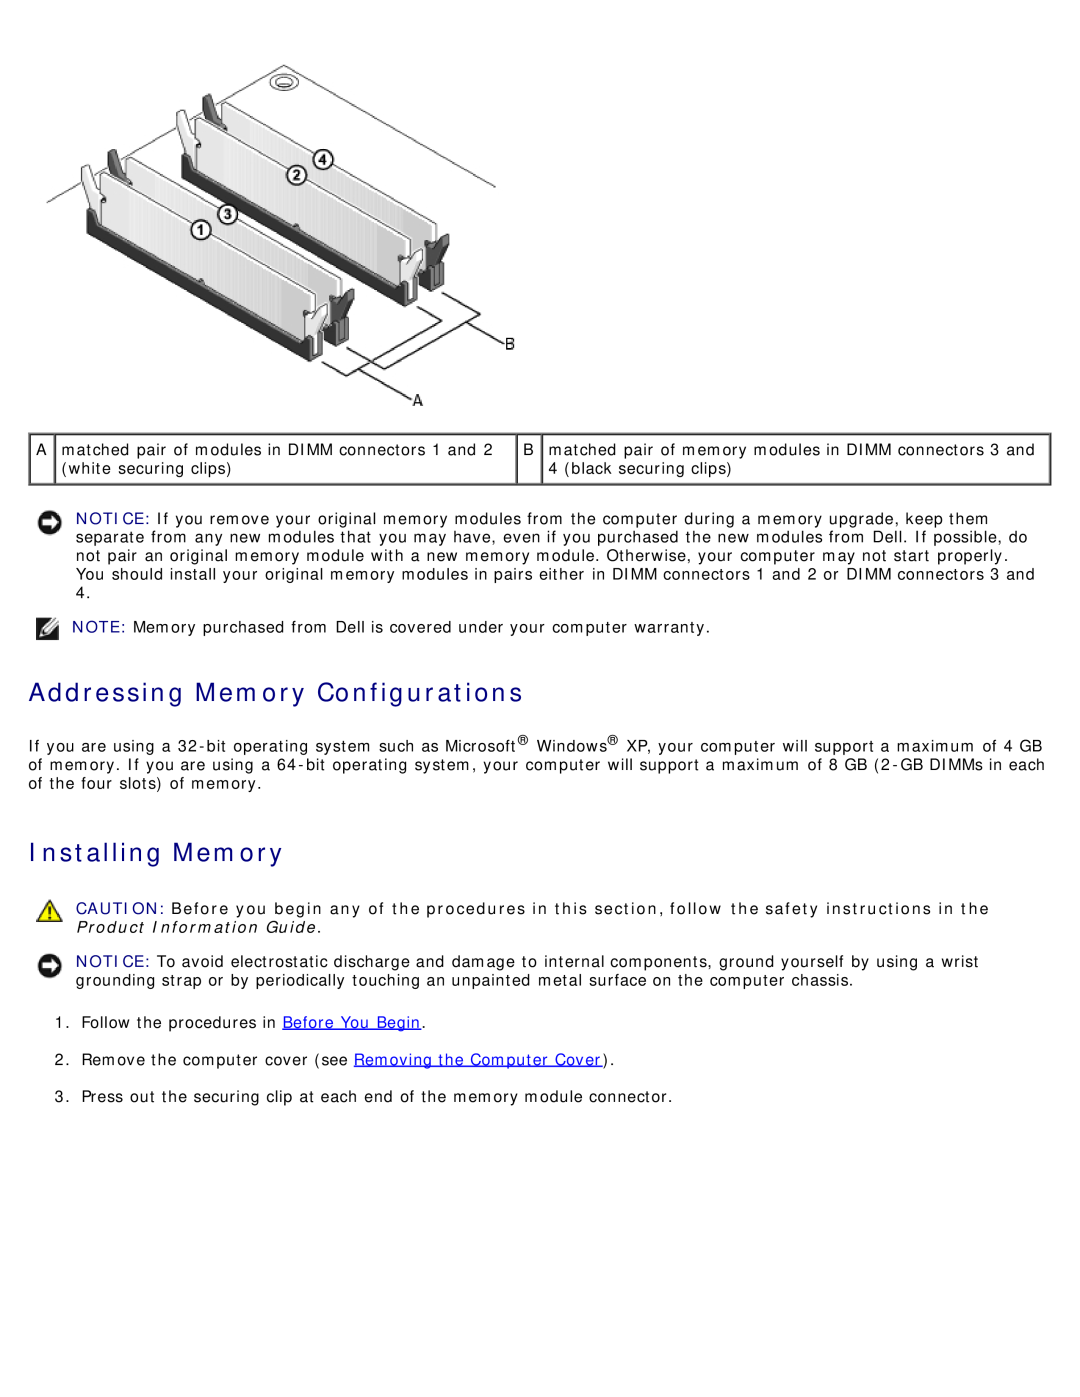 Dell 710 H2C, DCDO service manual Addressing Memory Configurations, Installing Memory 